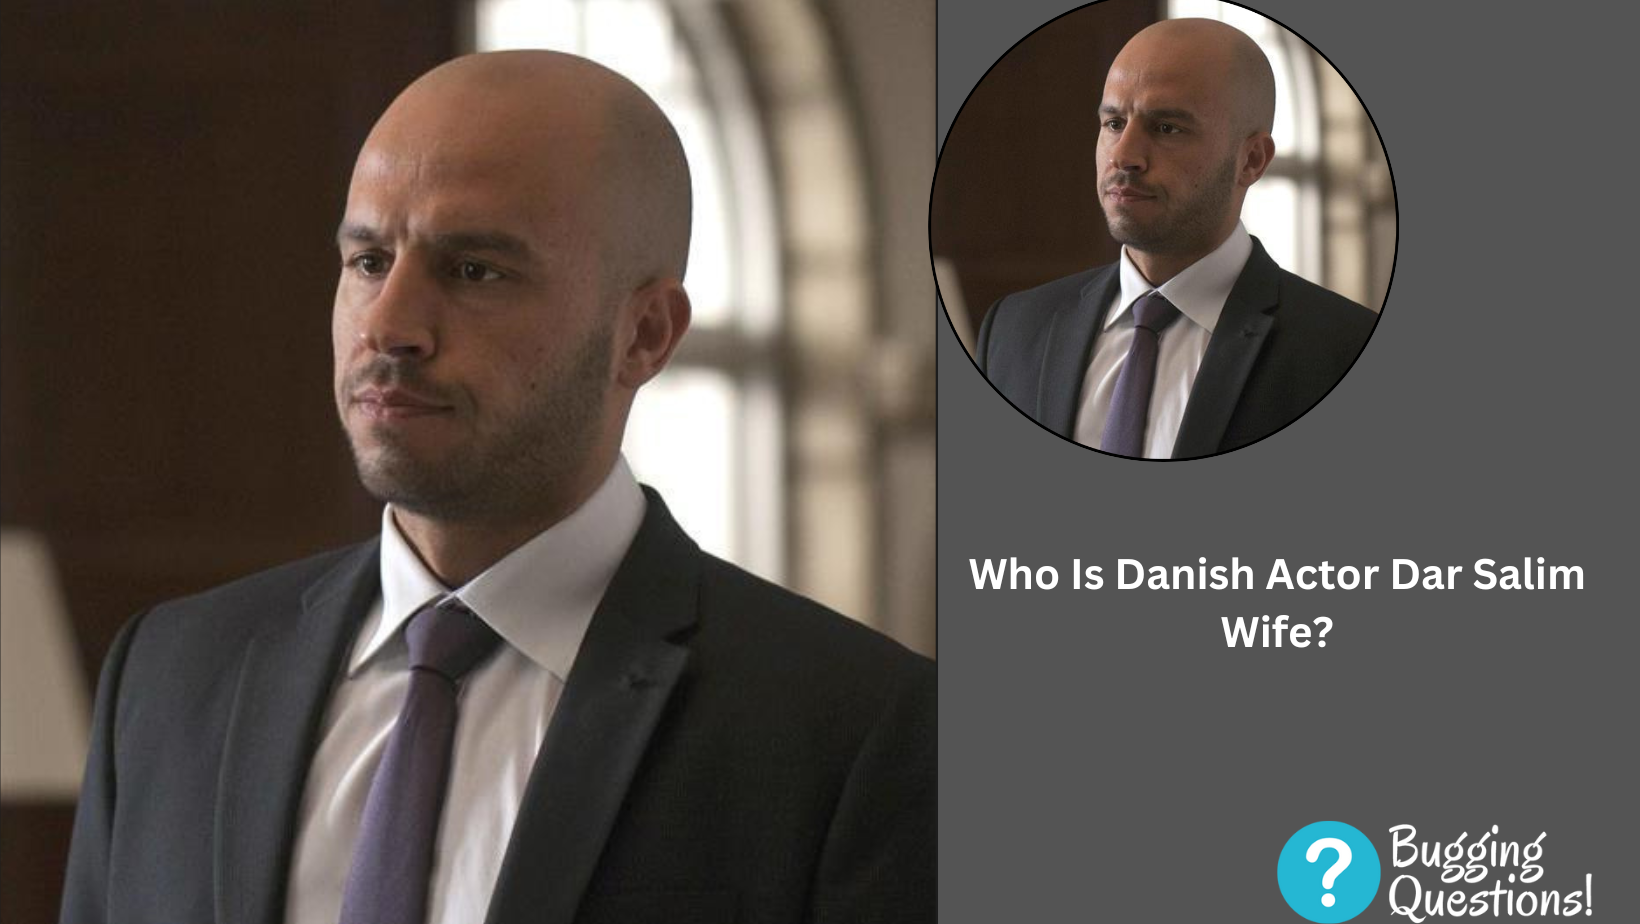 Who Is Danish Actor Dar Salim Wife?